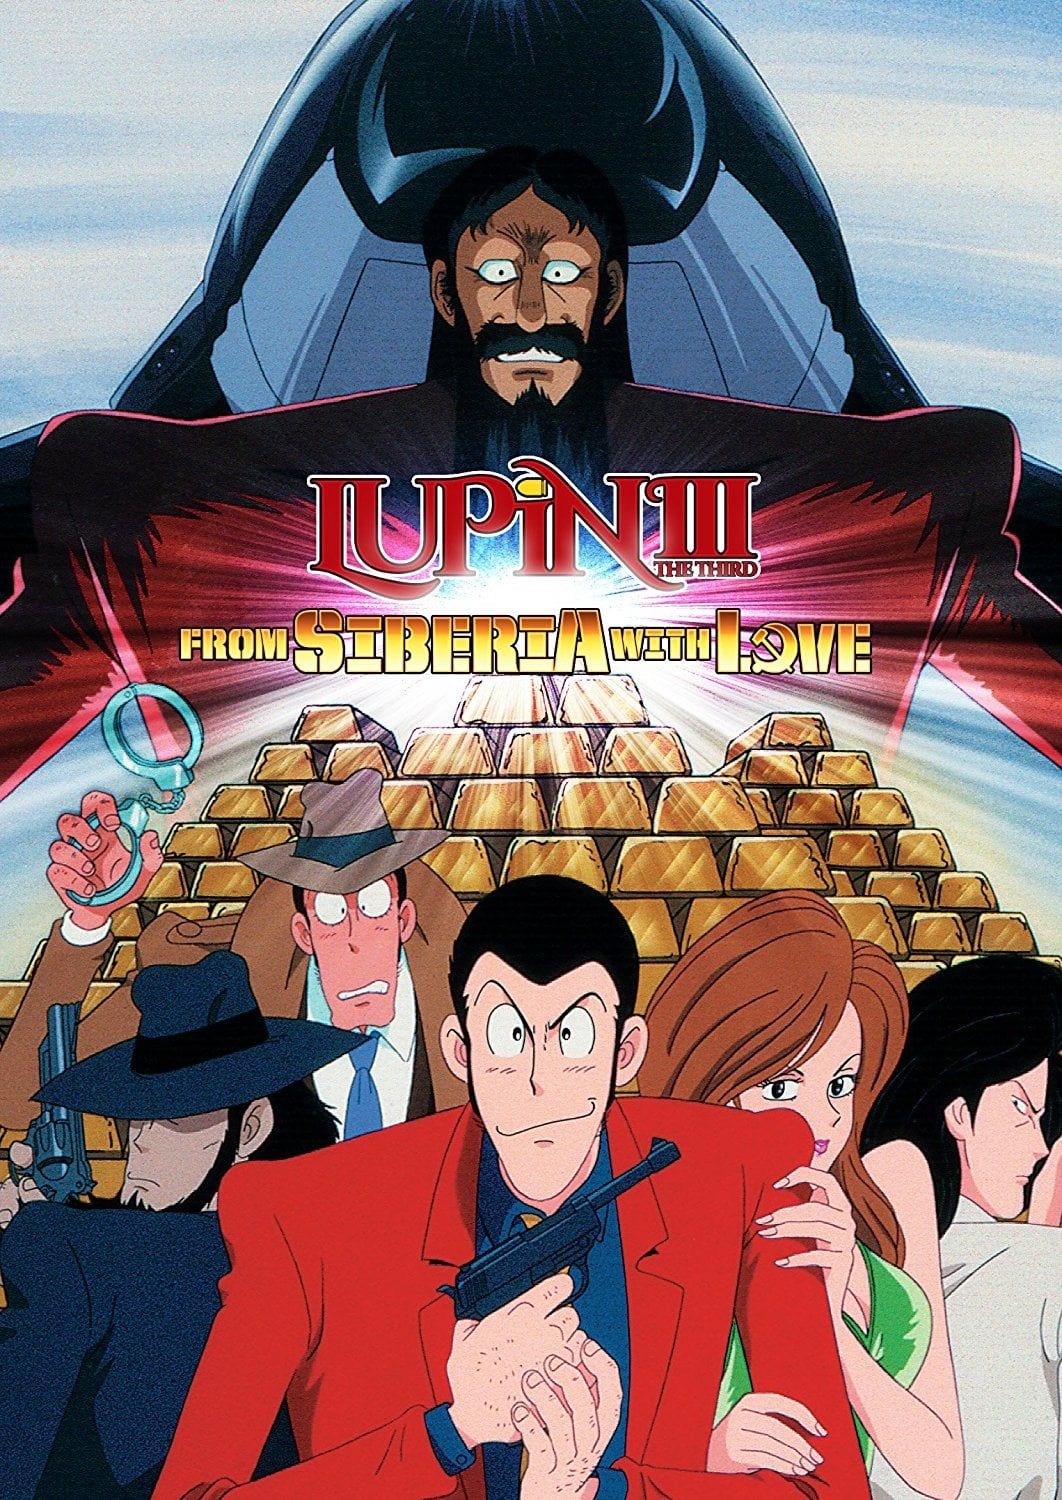 [Adventure] Lupin III: Russia yori Ai wo Komete (Special) (Sub) EN